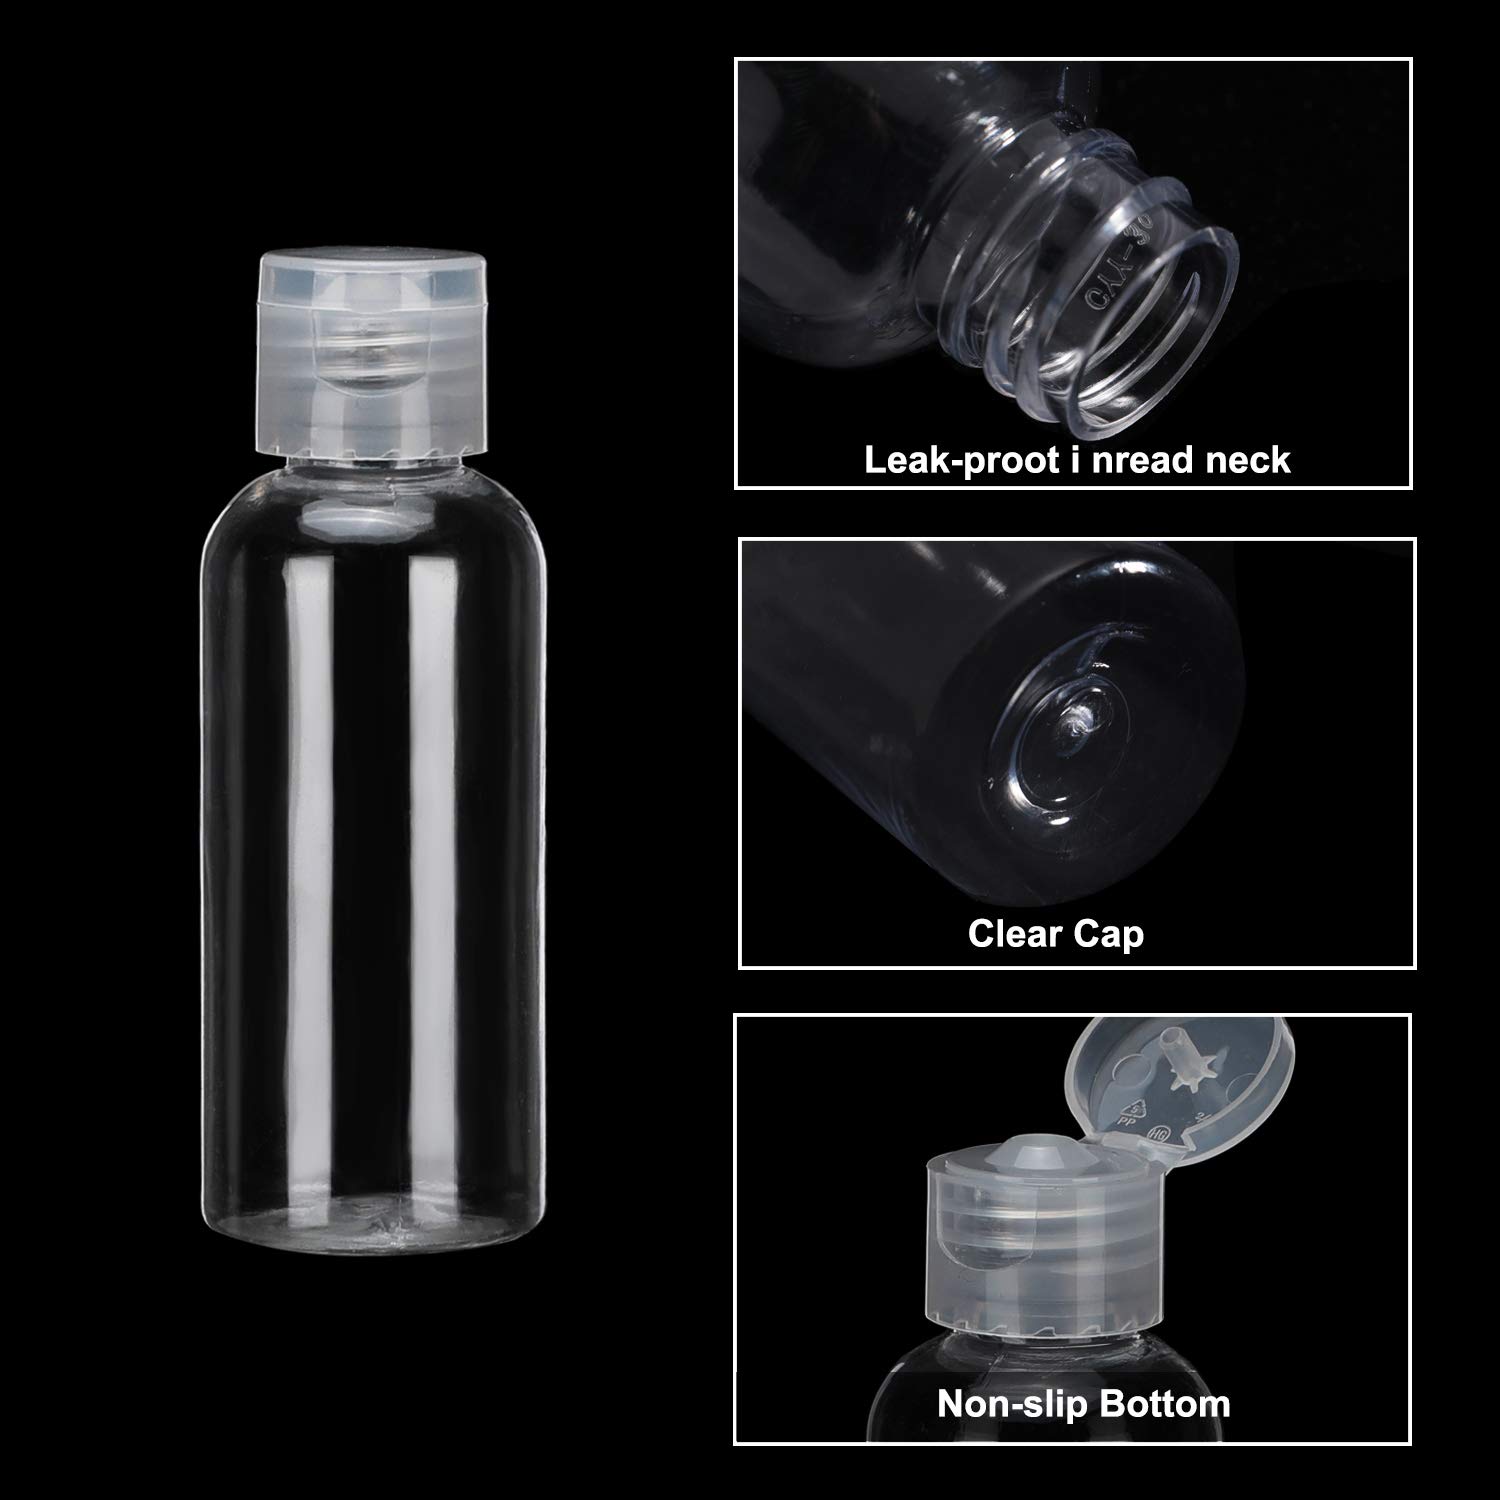 50/60/100ml Clear Plastic Travel Bottles Flip Cap Empty Bottles Refillable Bottles Containers for Cosmetics, Lotion, Liquids